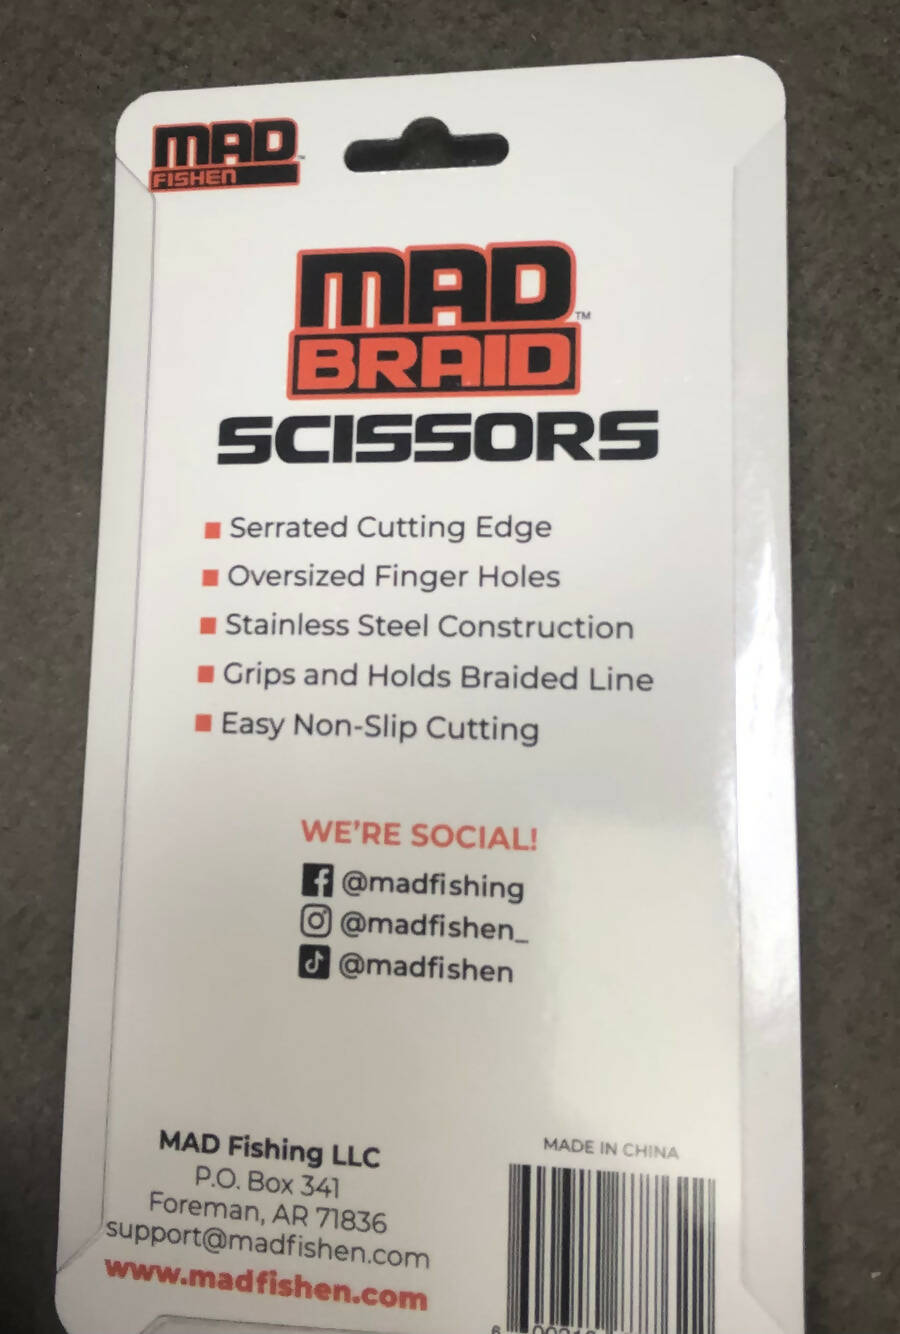 Mad Braid Scissors